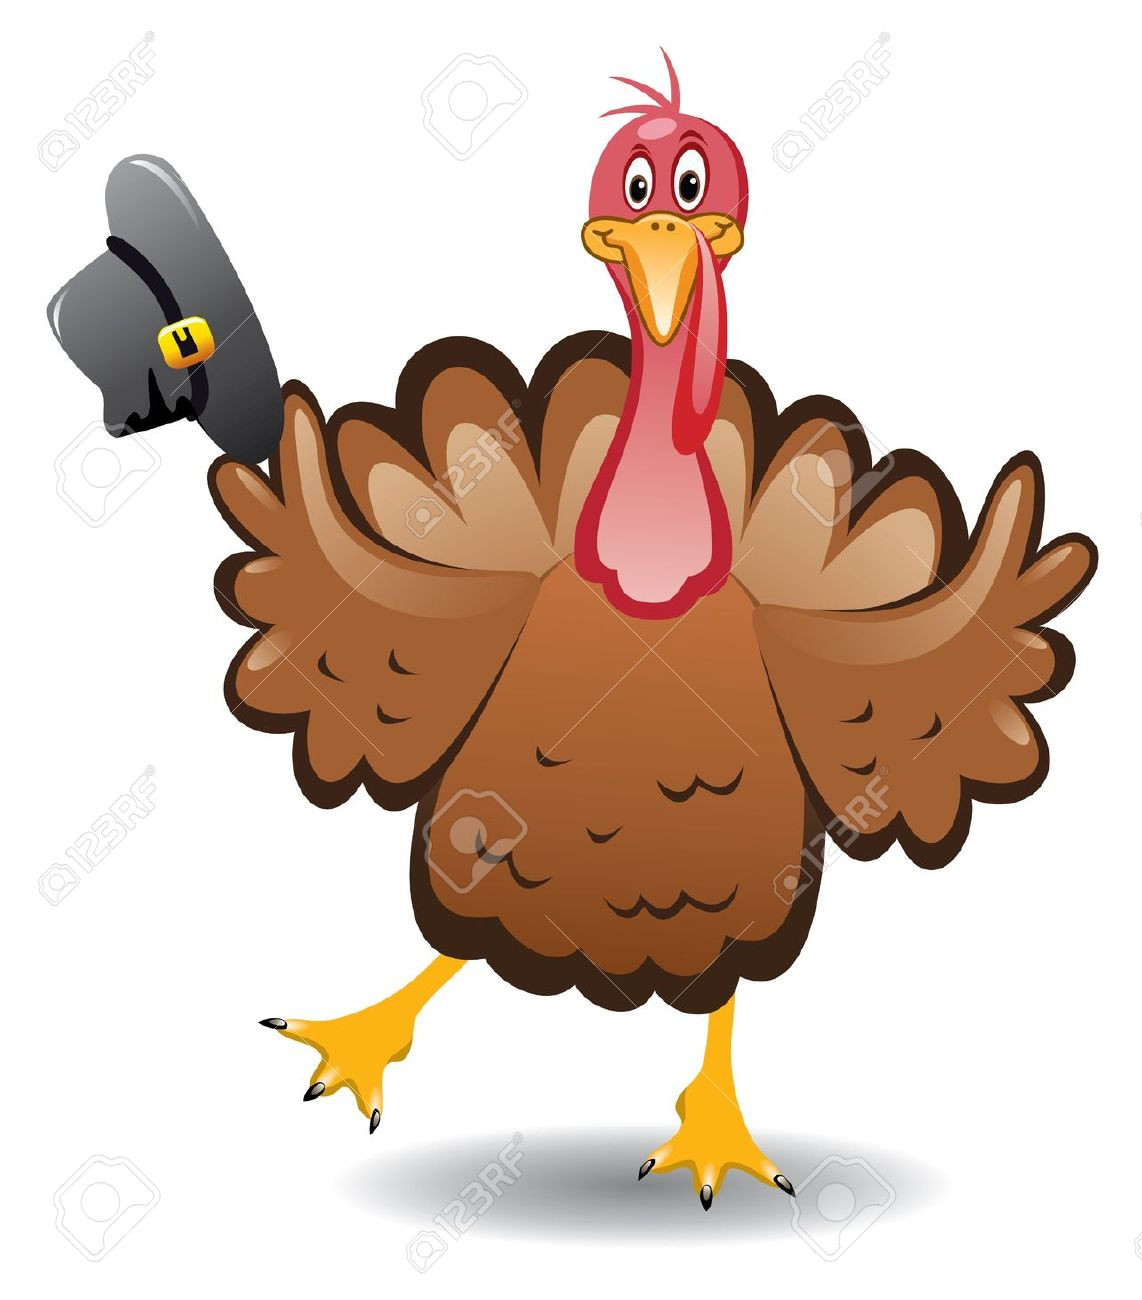 Thanksgiving Turkey Graphic
 Pavo clipart Clipground